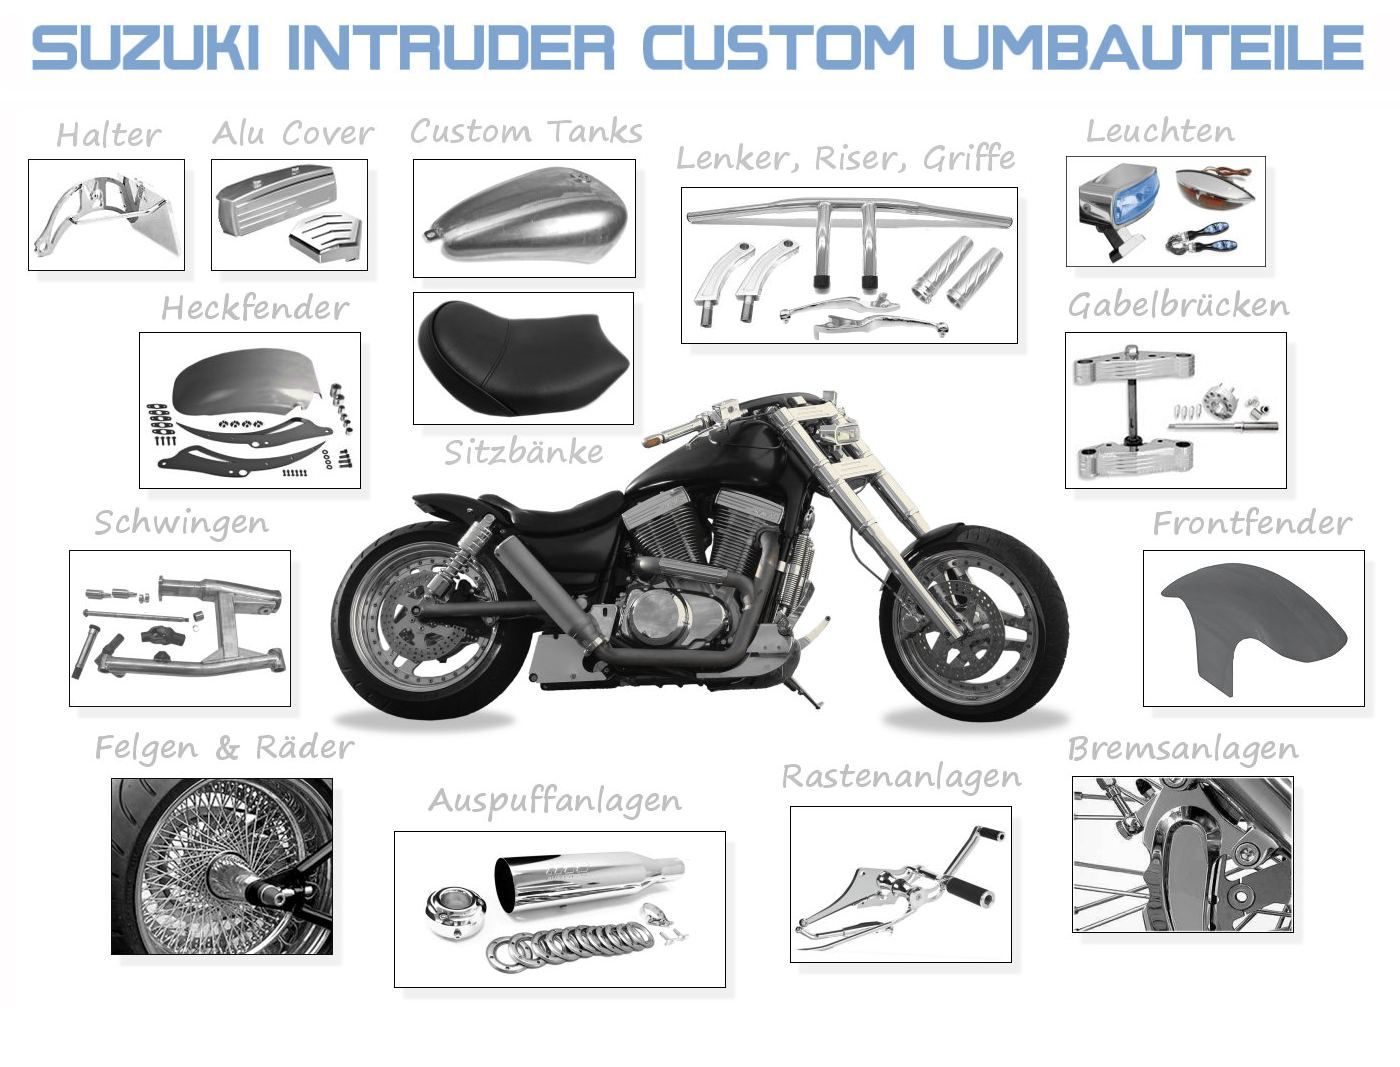 SUZUKI suzuki-vs-800-intruder-umbau-custom Used - the parking motorcycles